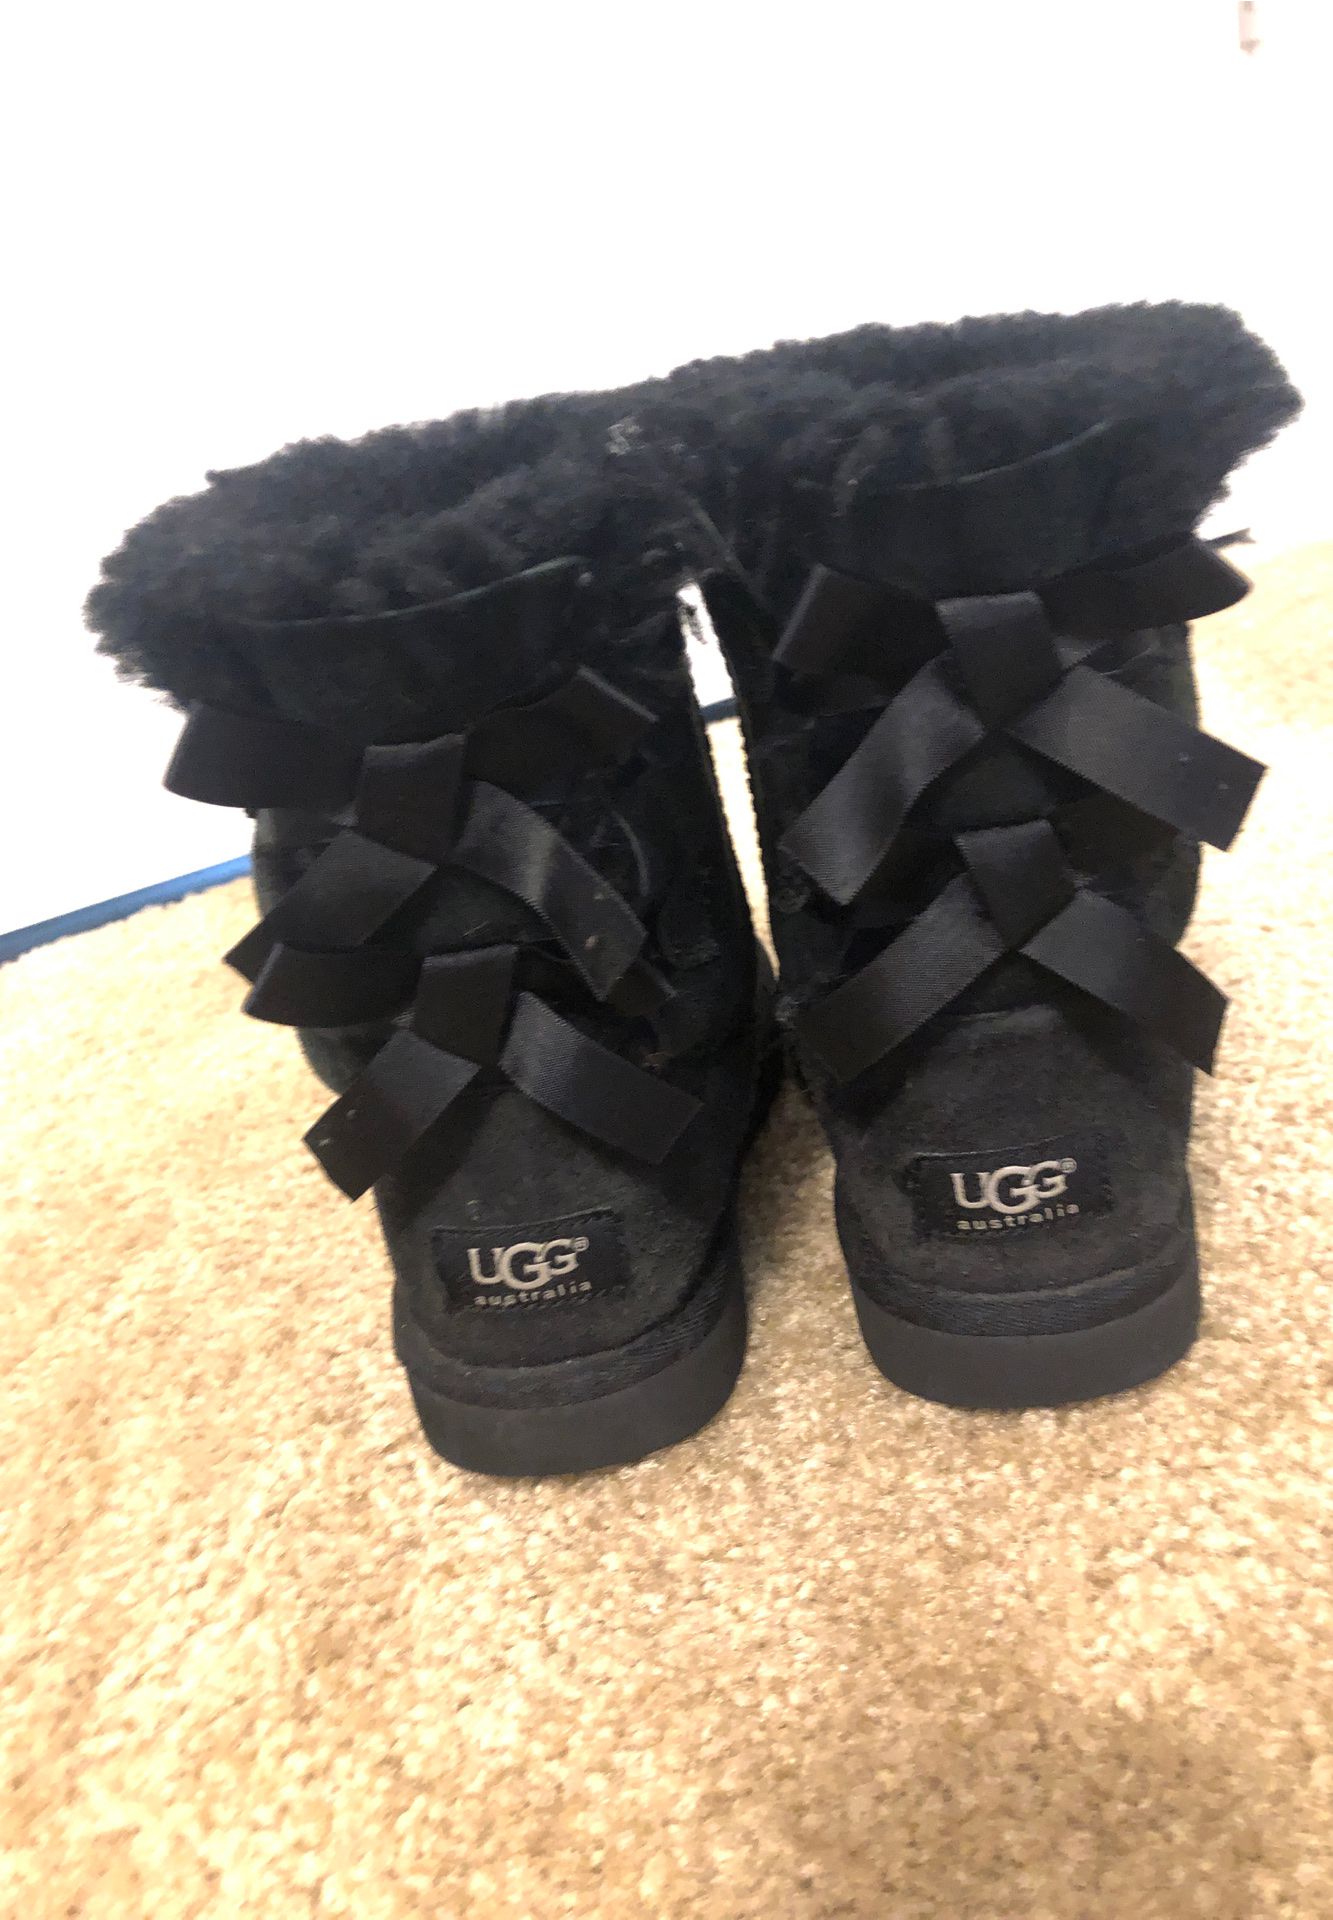 Ugg boots black